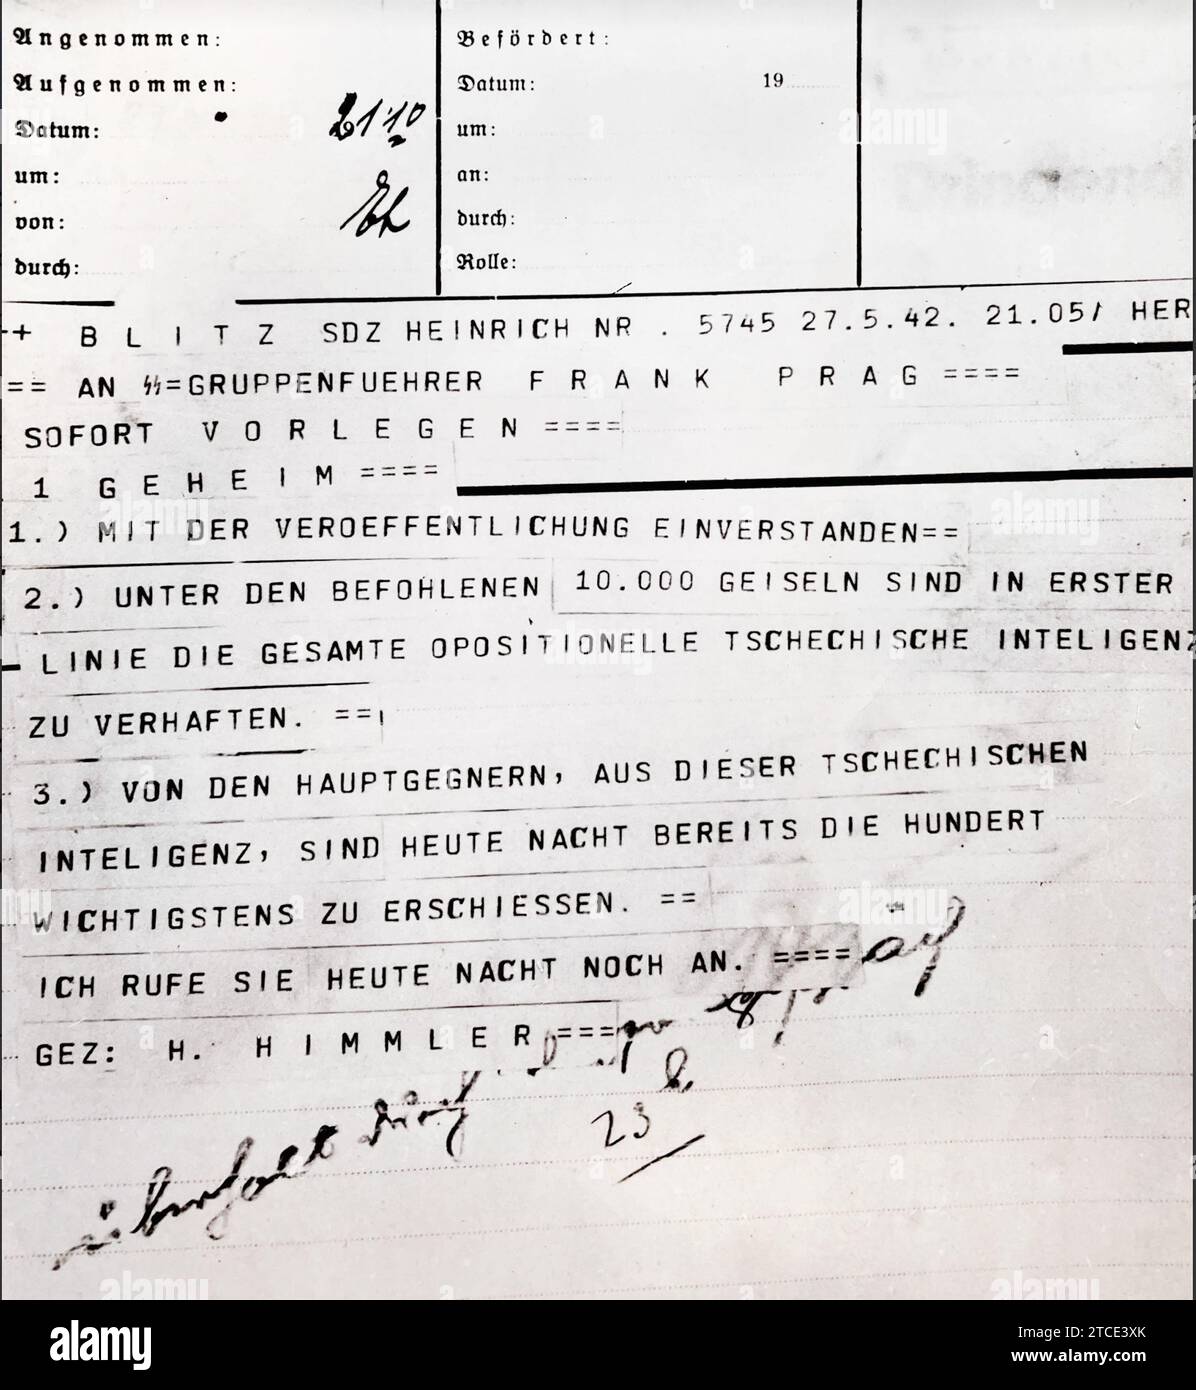 H.Himmler Totenkopf Ring Der SS - Slb. von Weppeler 20.4.38